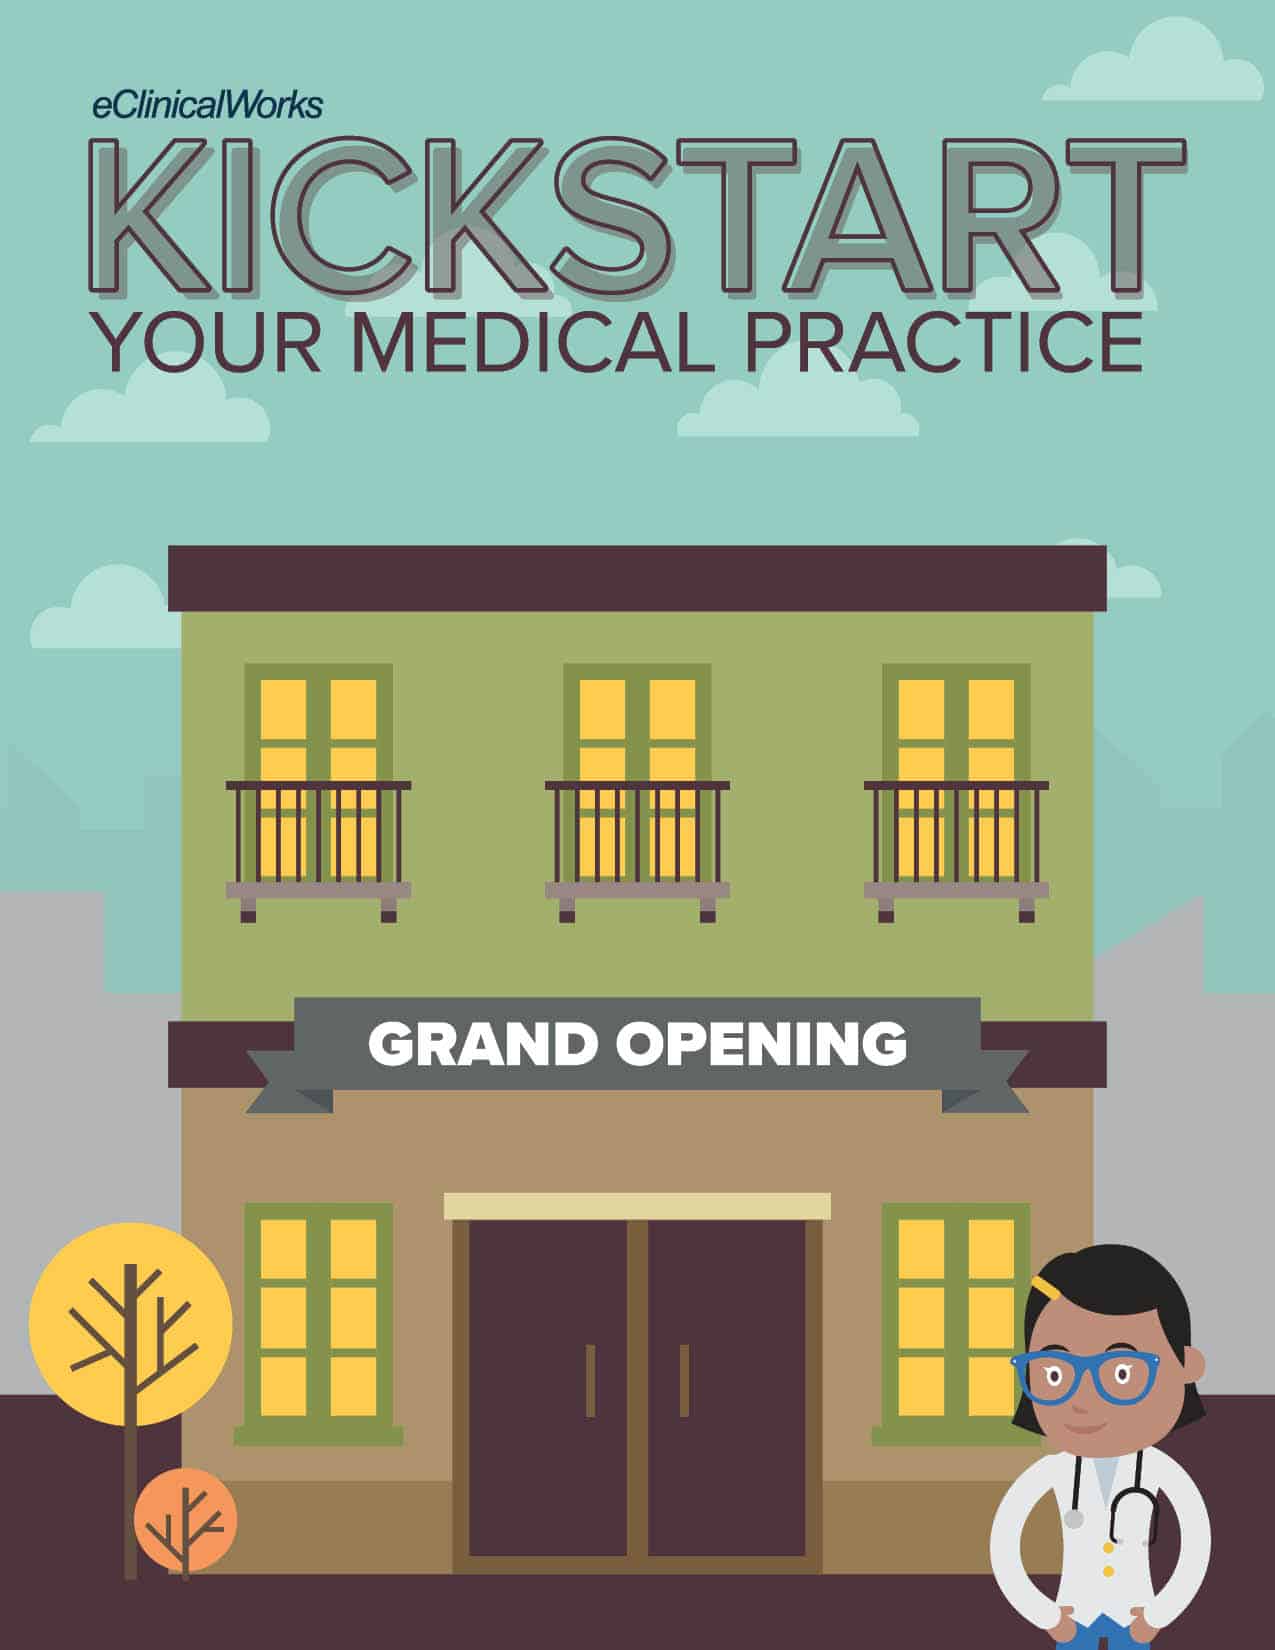 An image of the Kickstart Your Medical Practice eBook